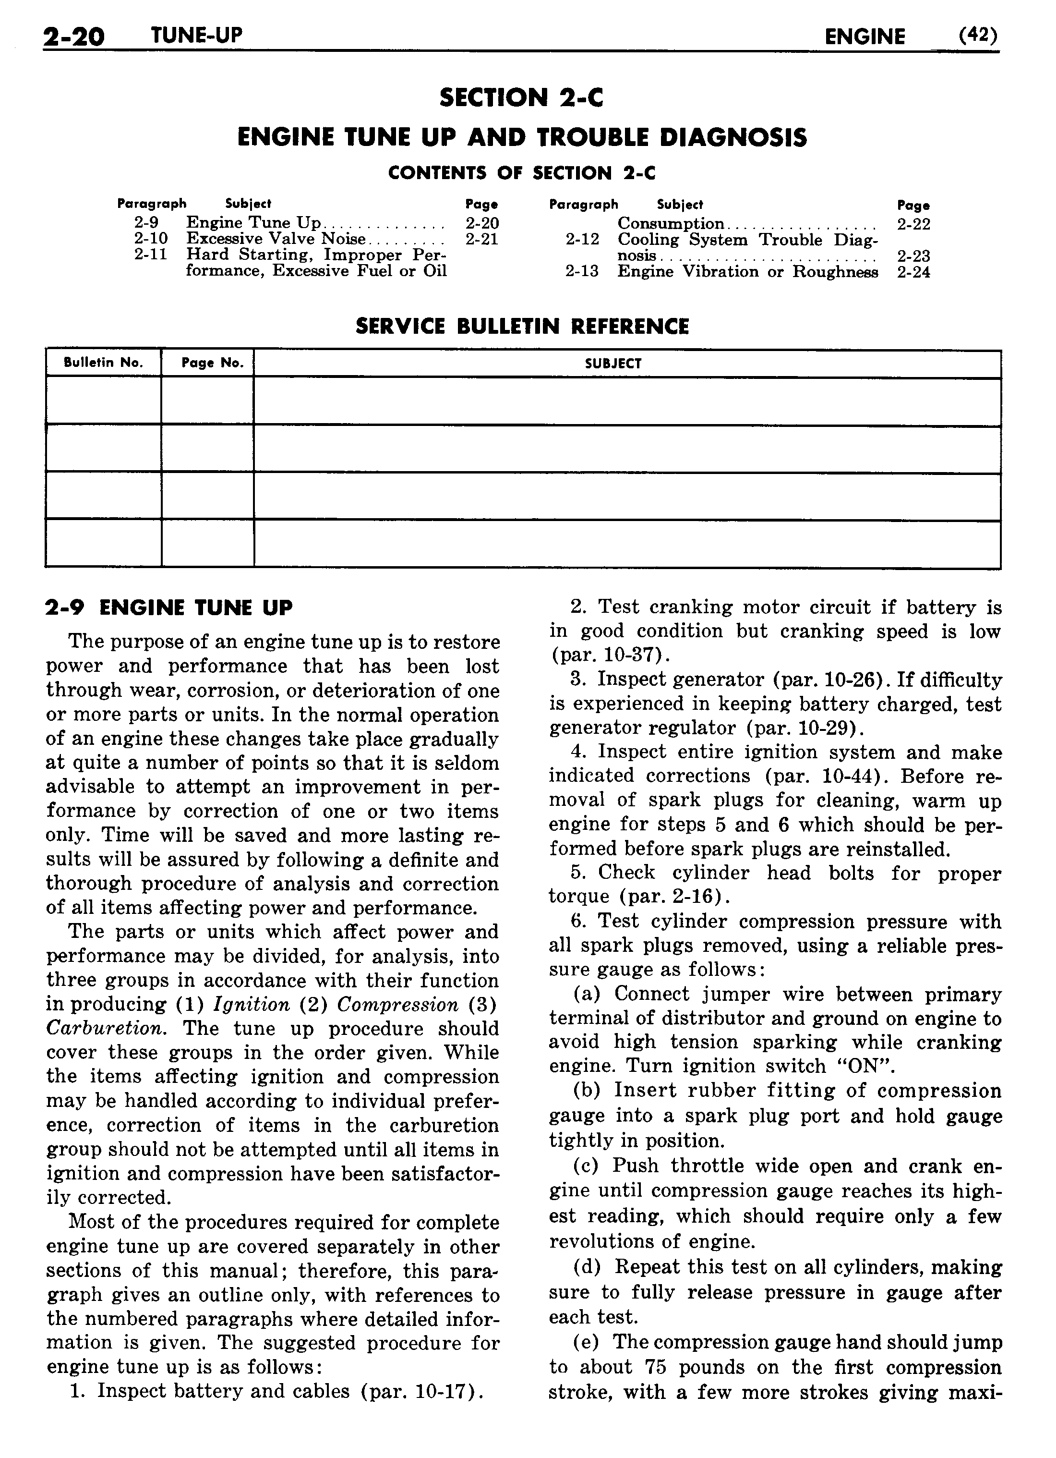 n_03 1948 Buick Shop Manual - Engine-020-020.jpg